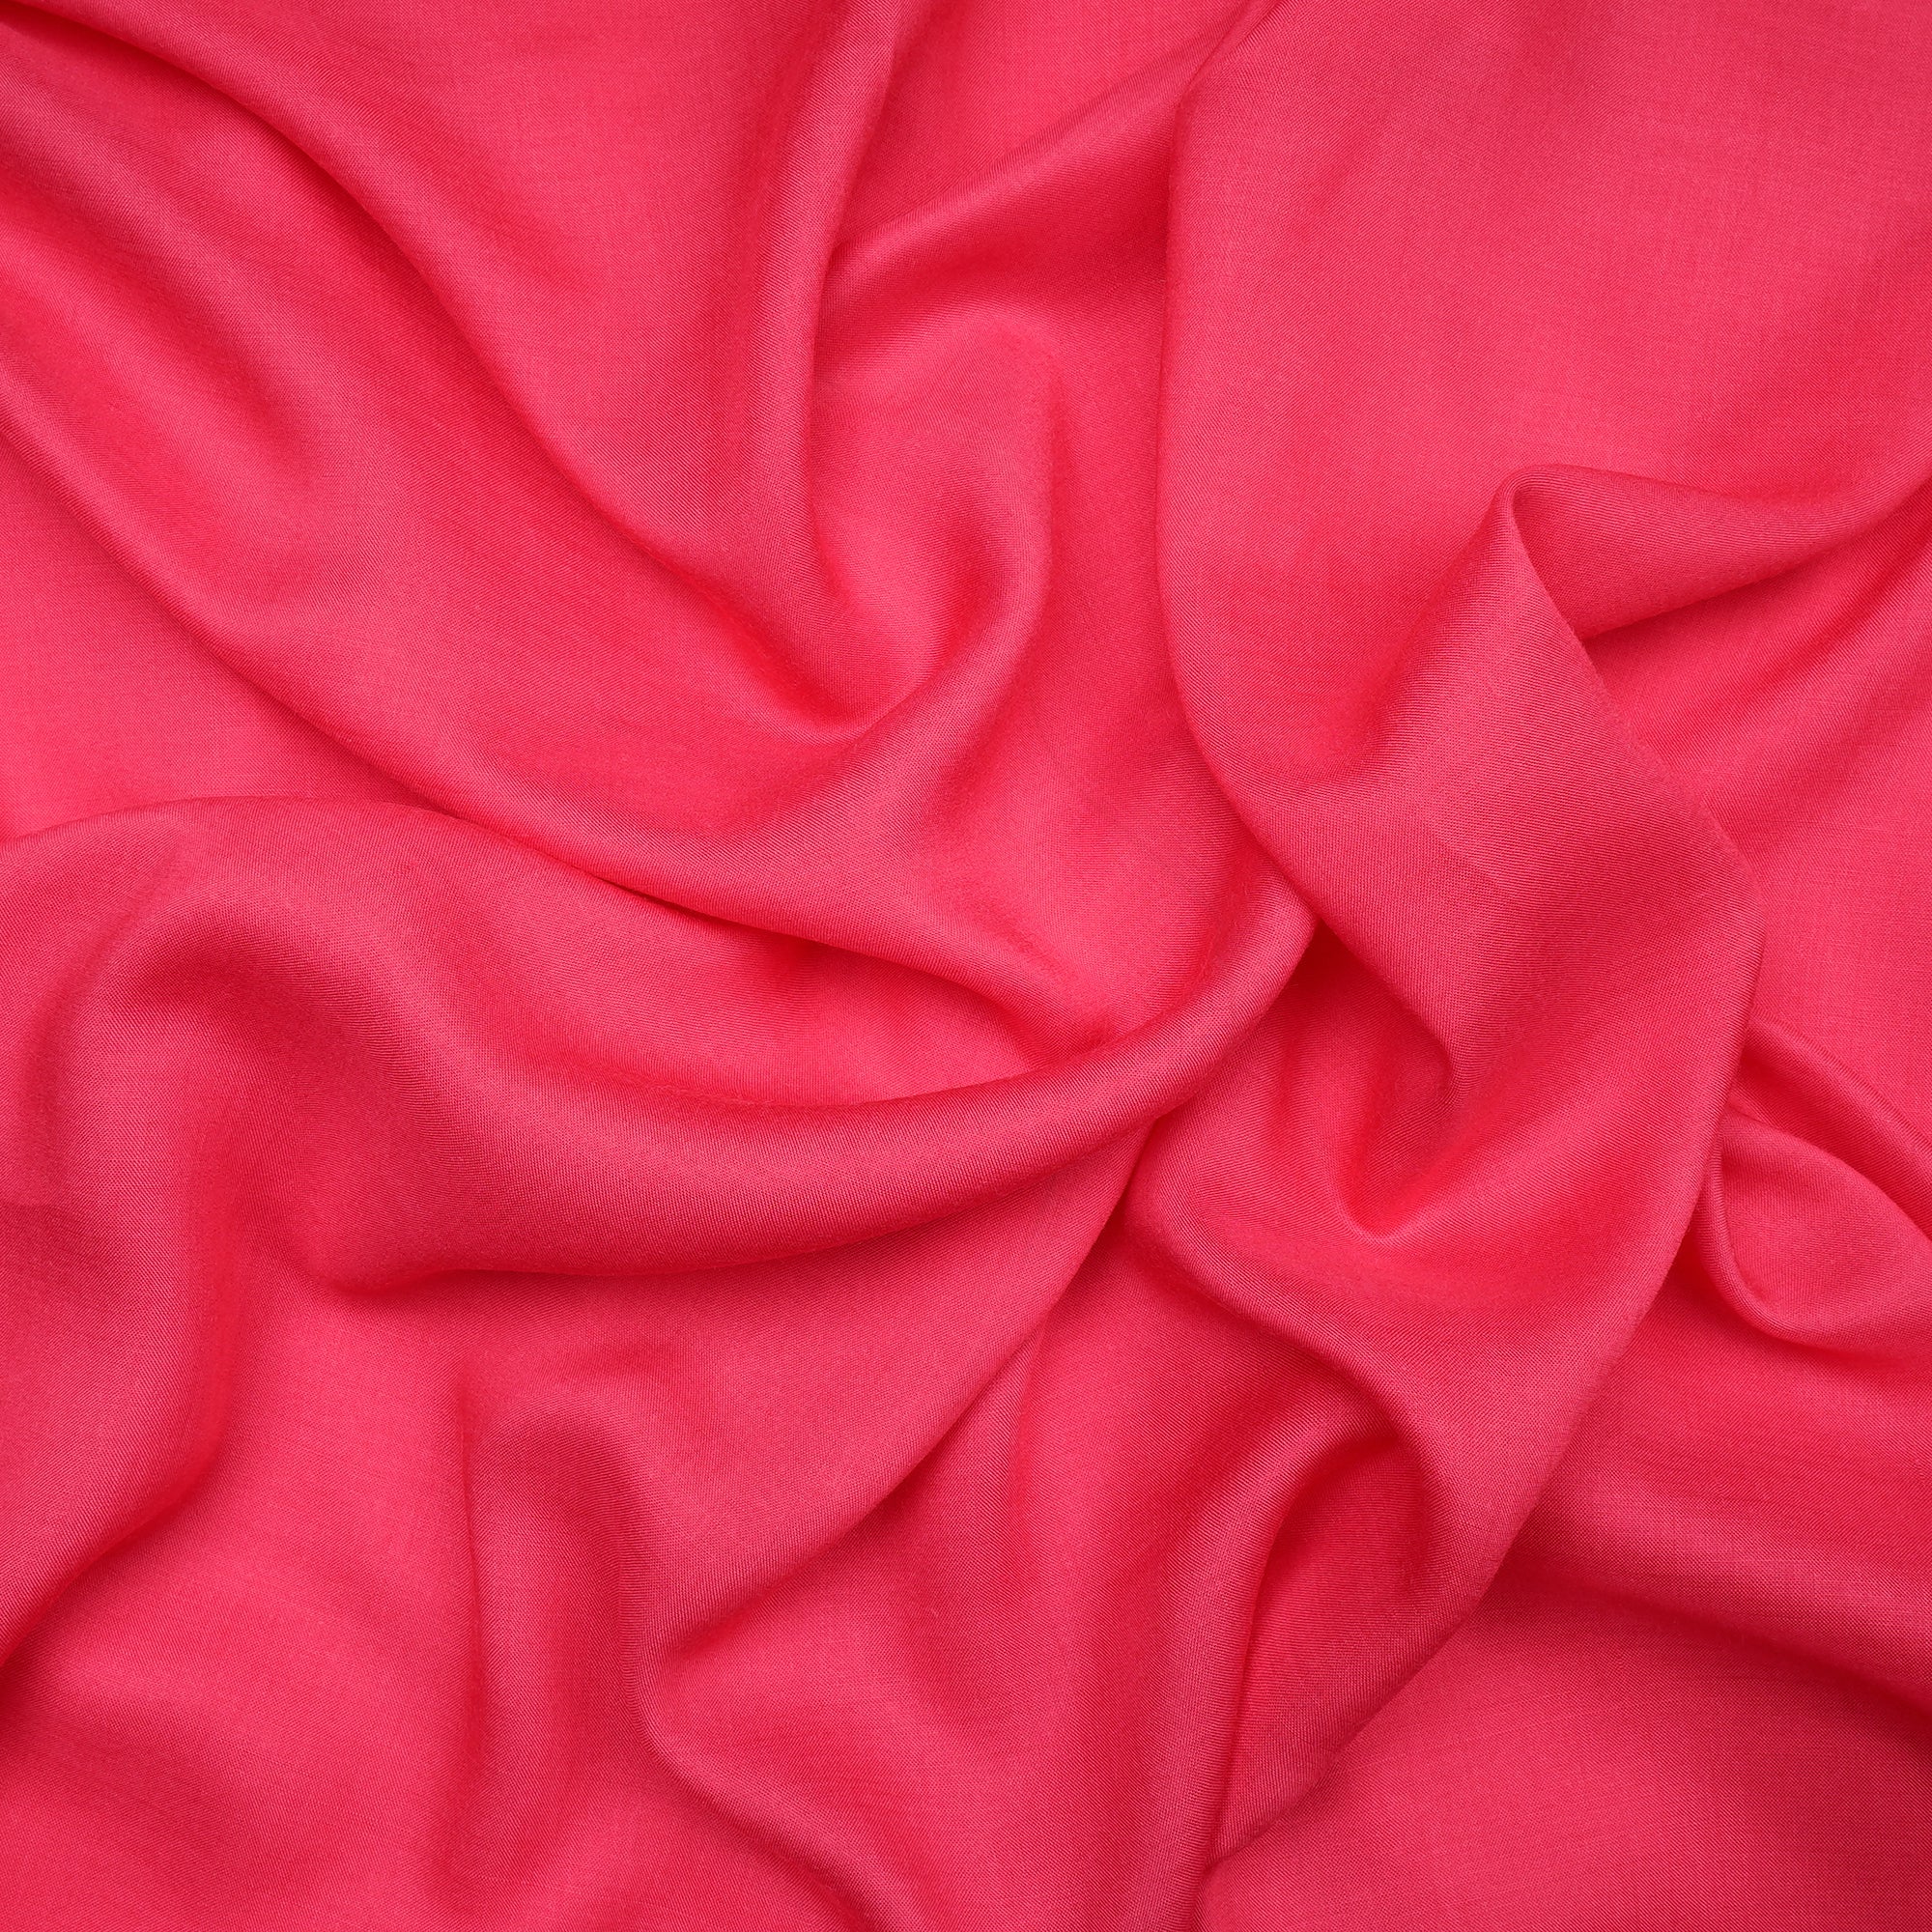 Brilliant Rose Piece Dyed Plain Modal Fabric